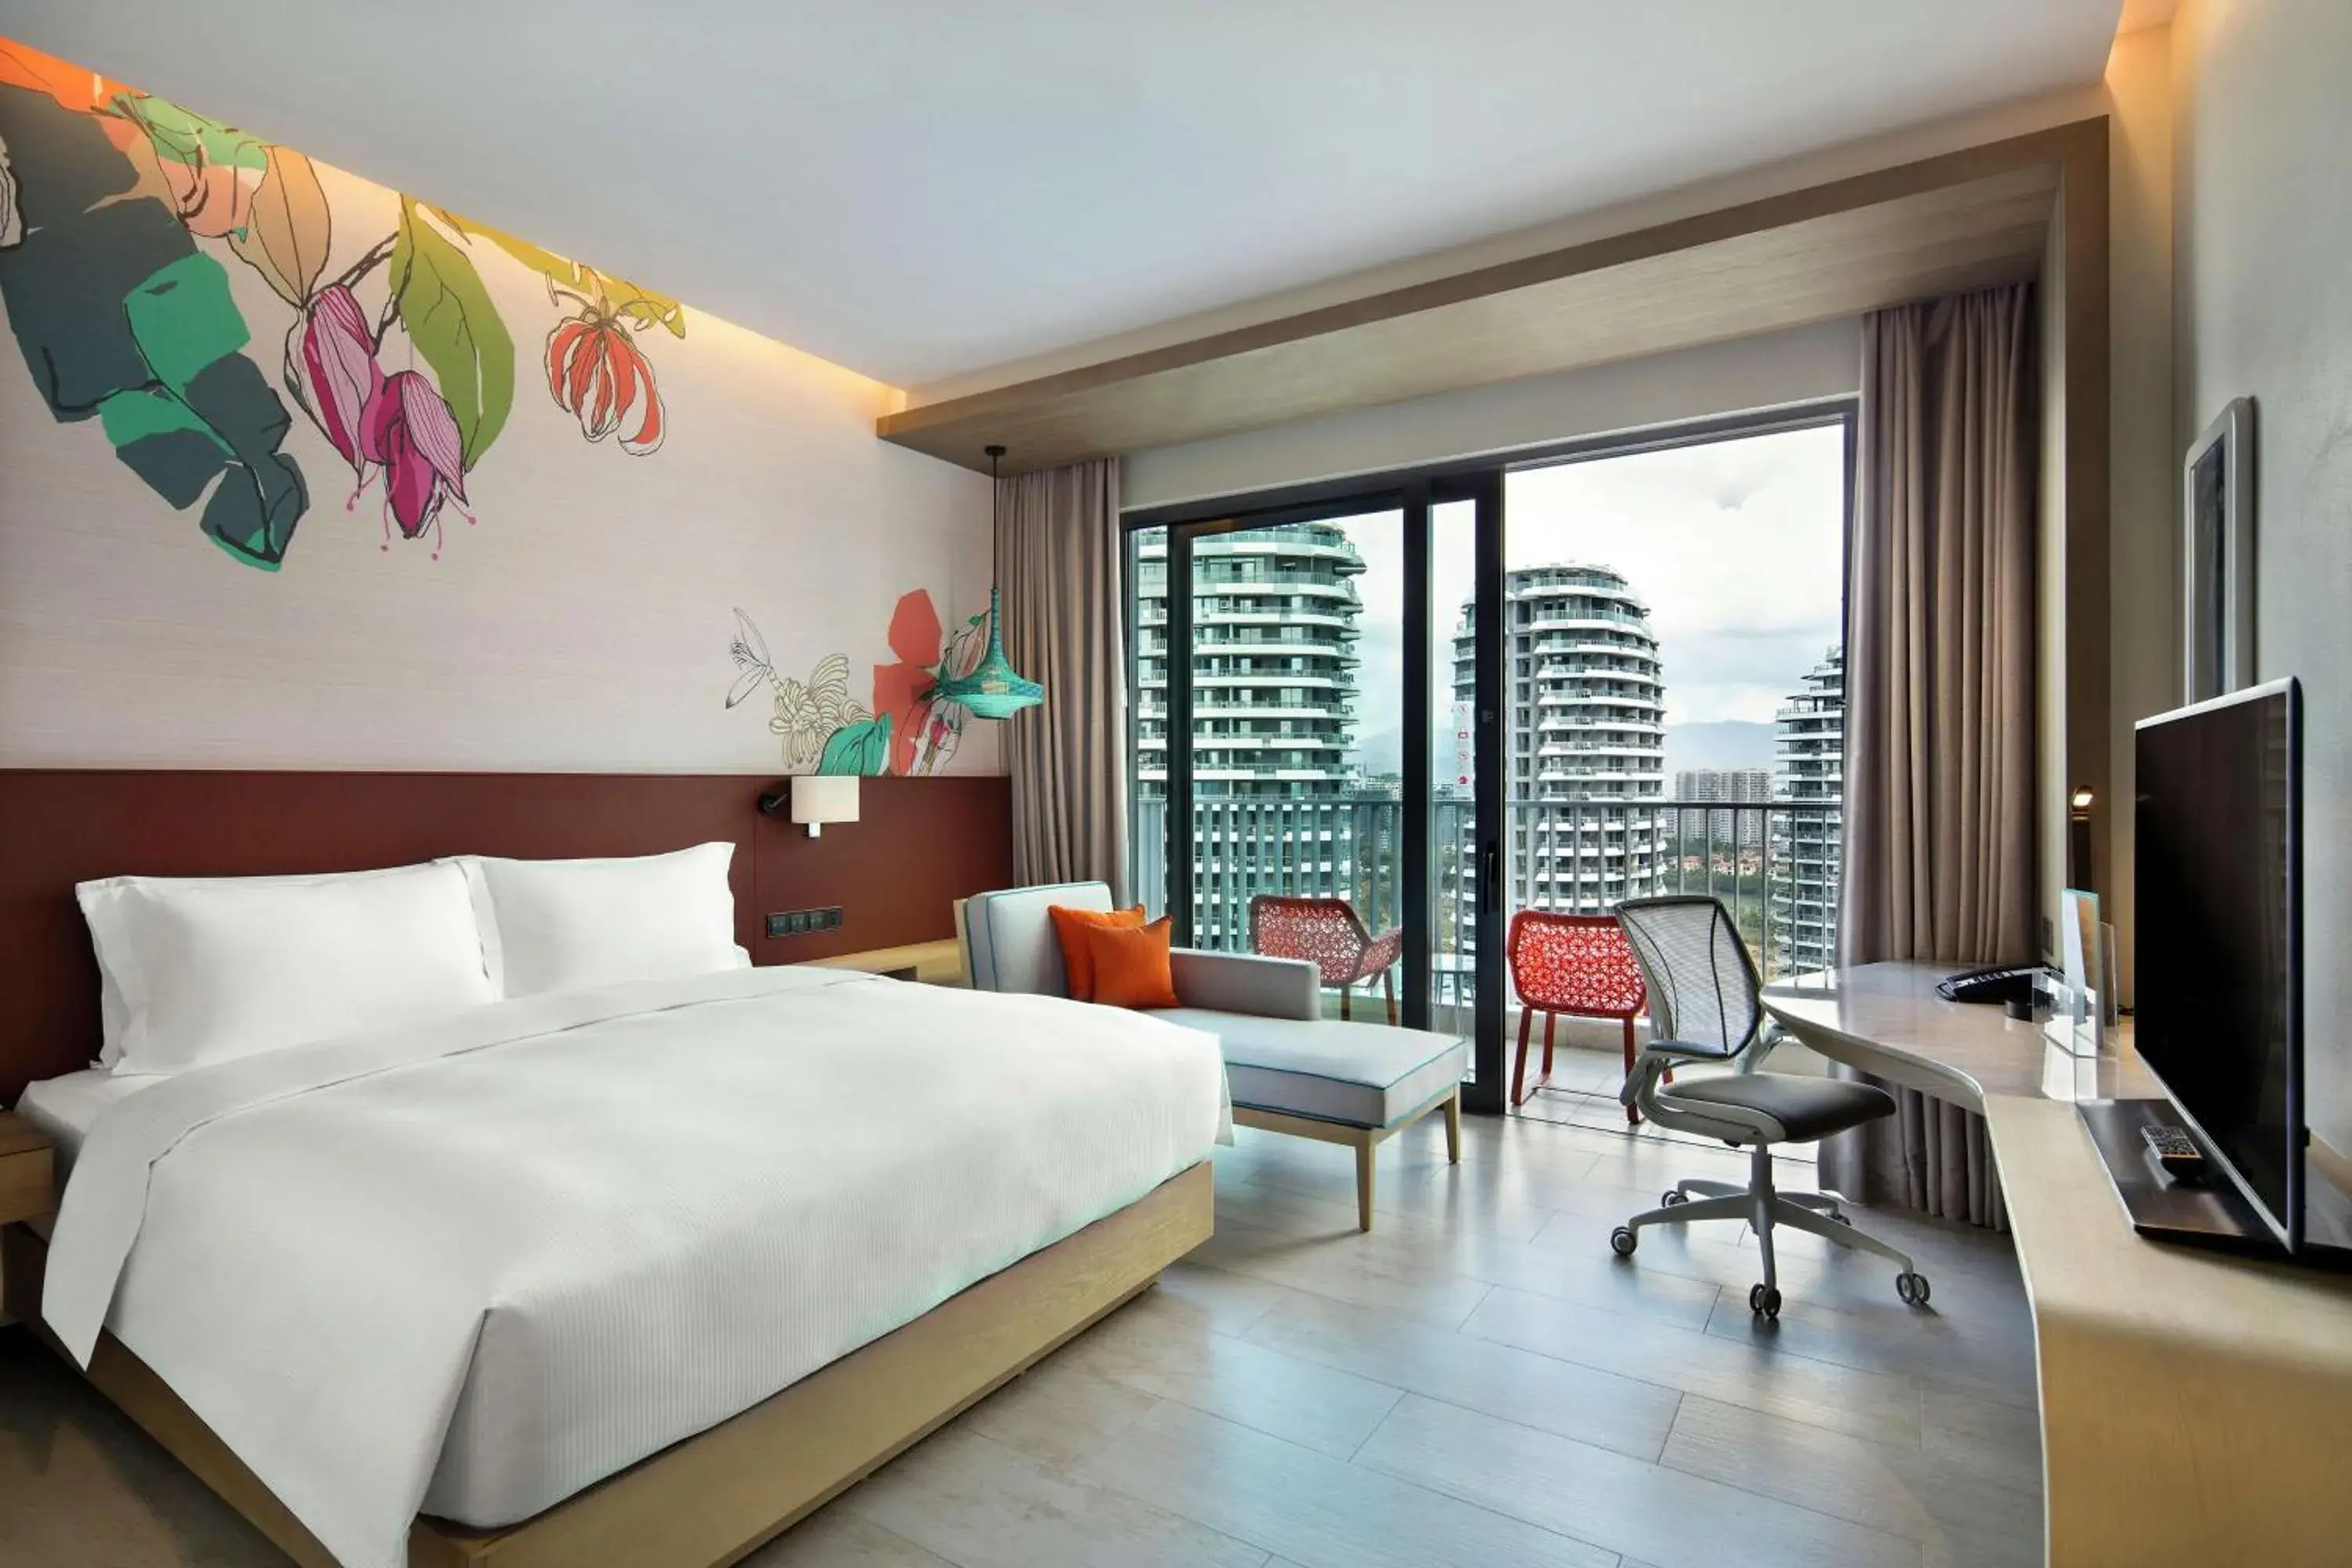 Bedroom in Hilton Garden Inn Sanya, China